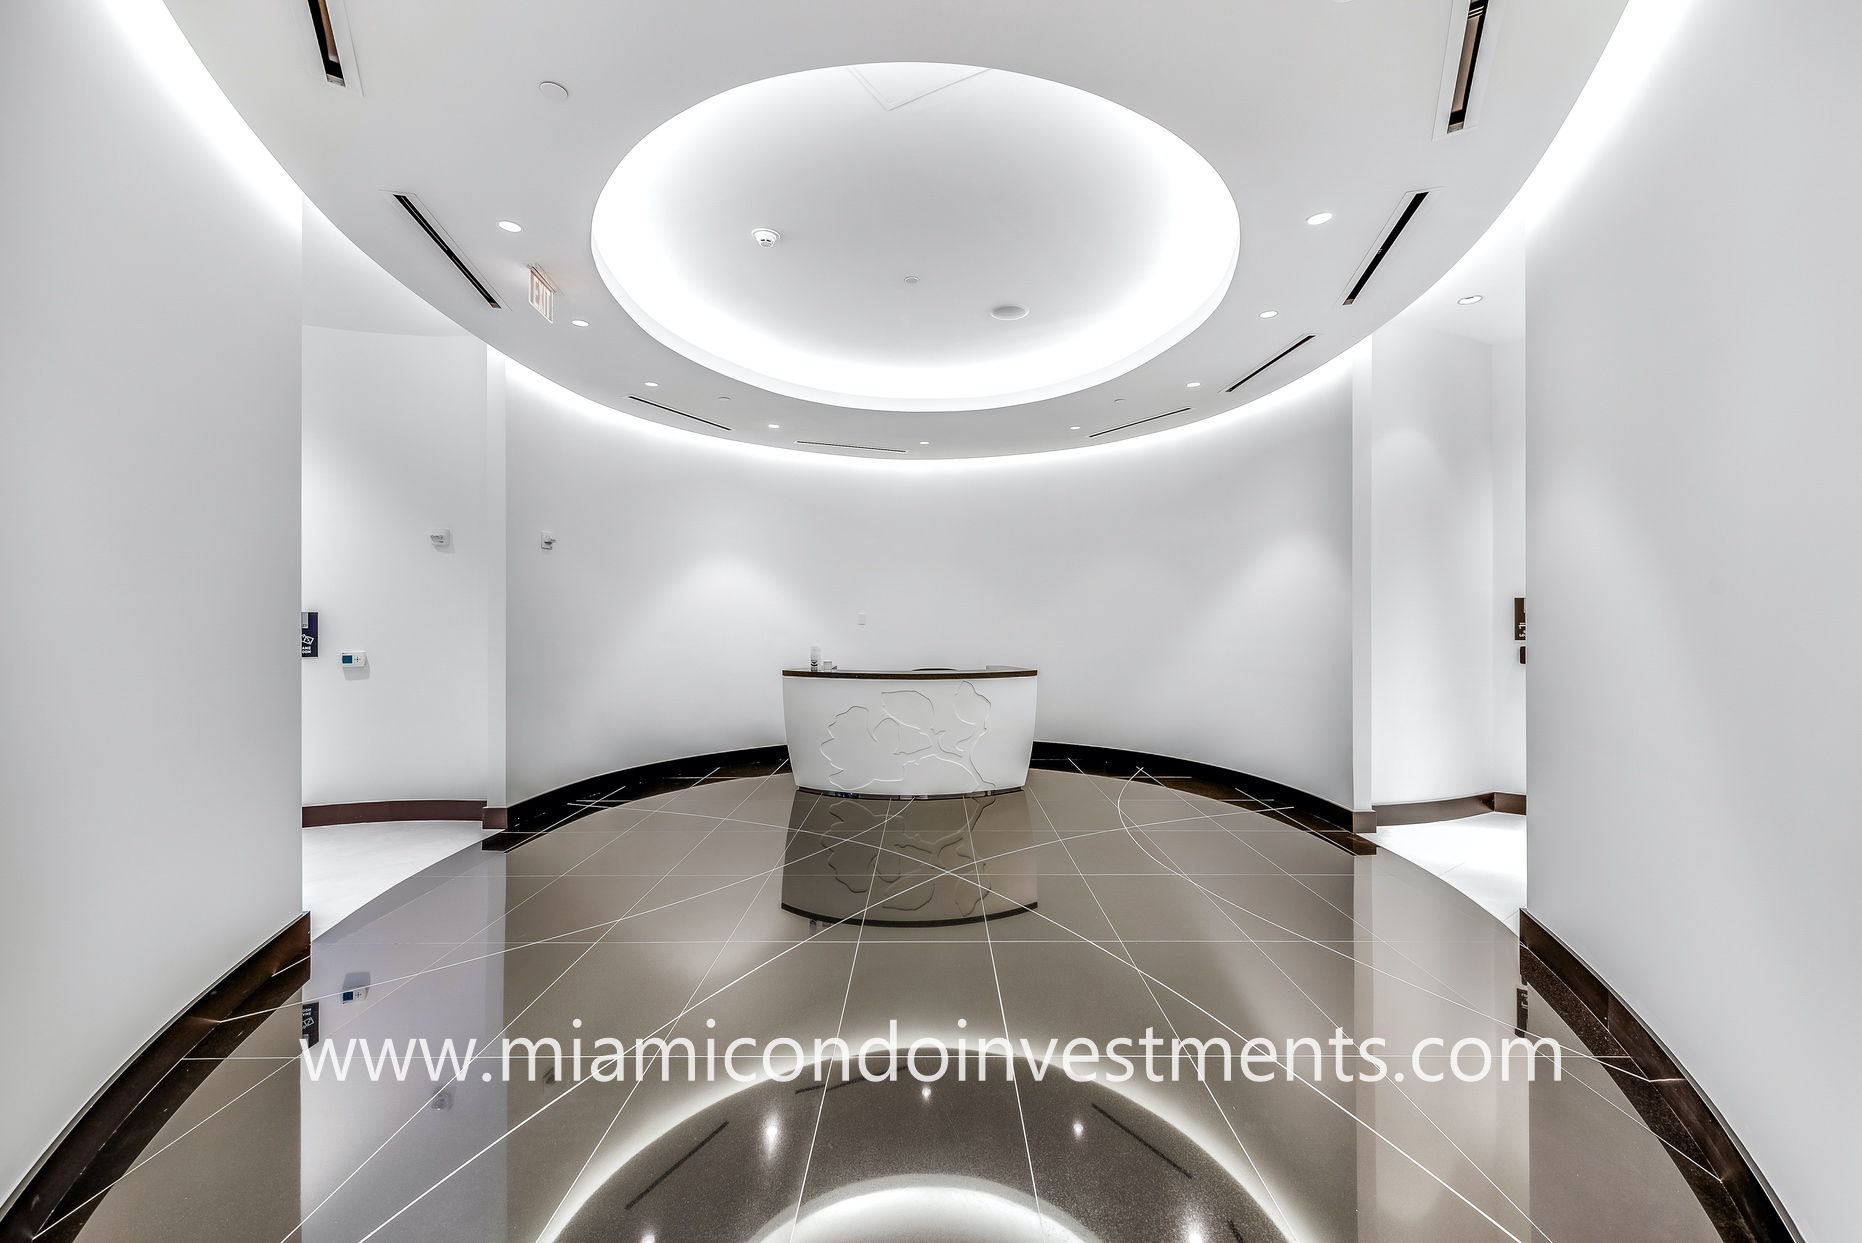 Paramount Miami Worldcenter spa entrance